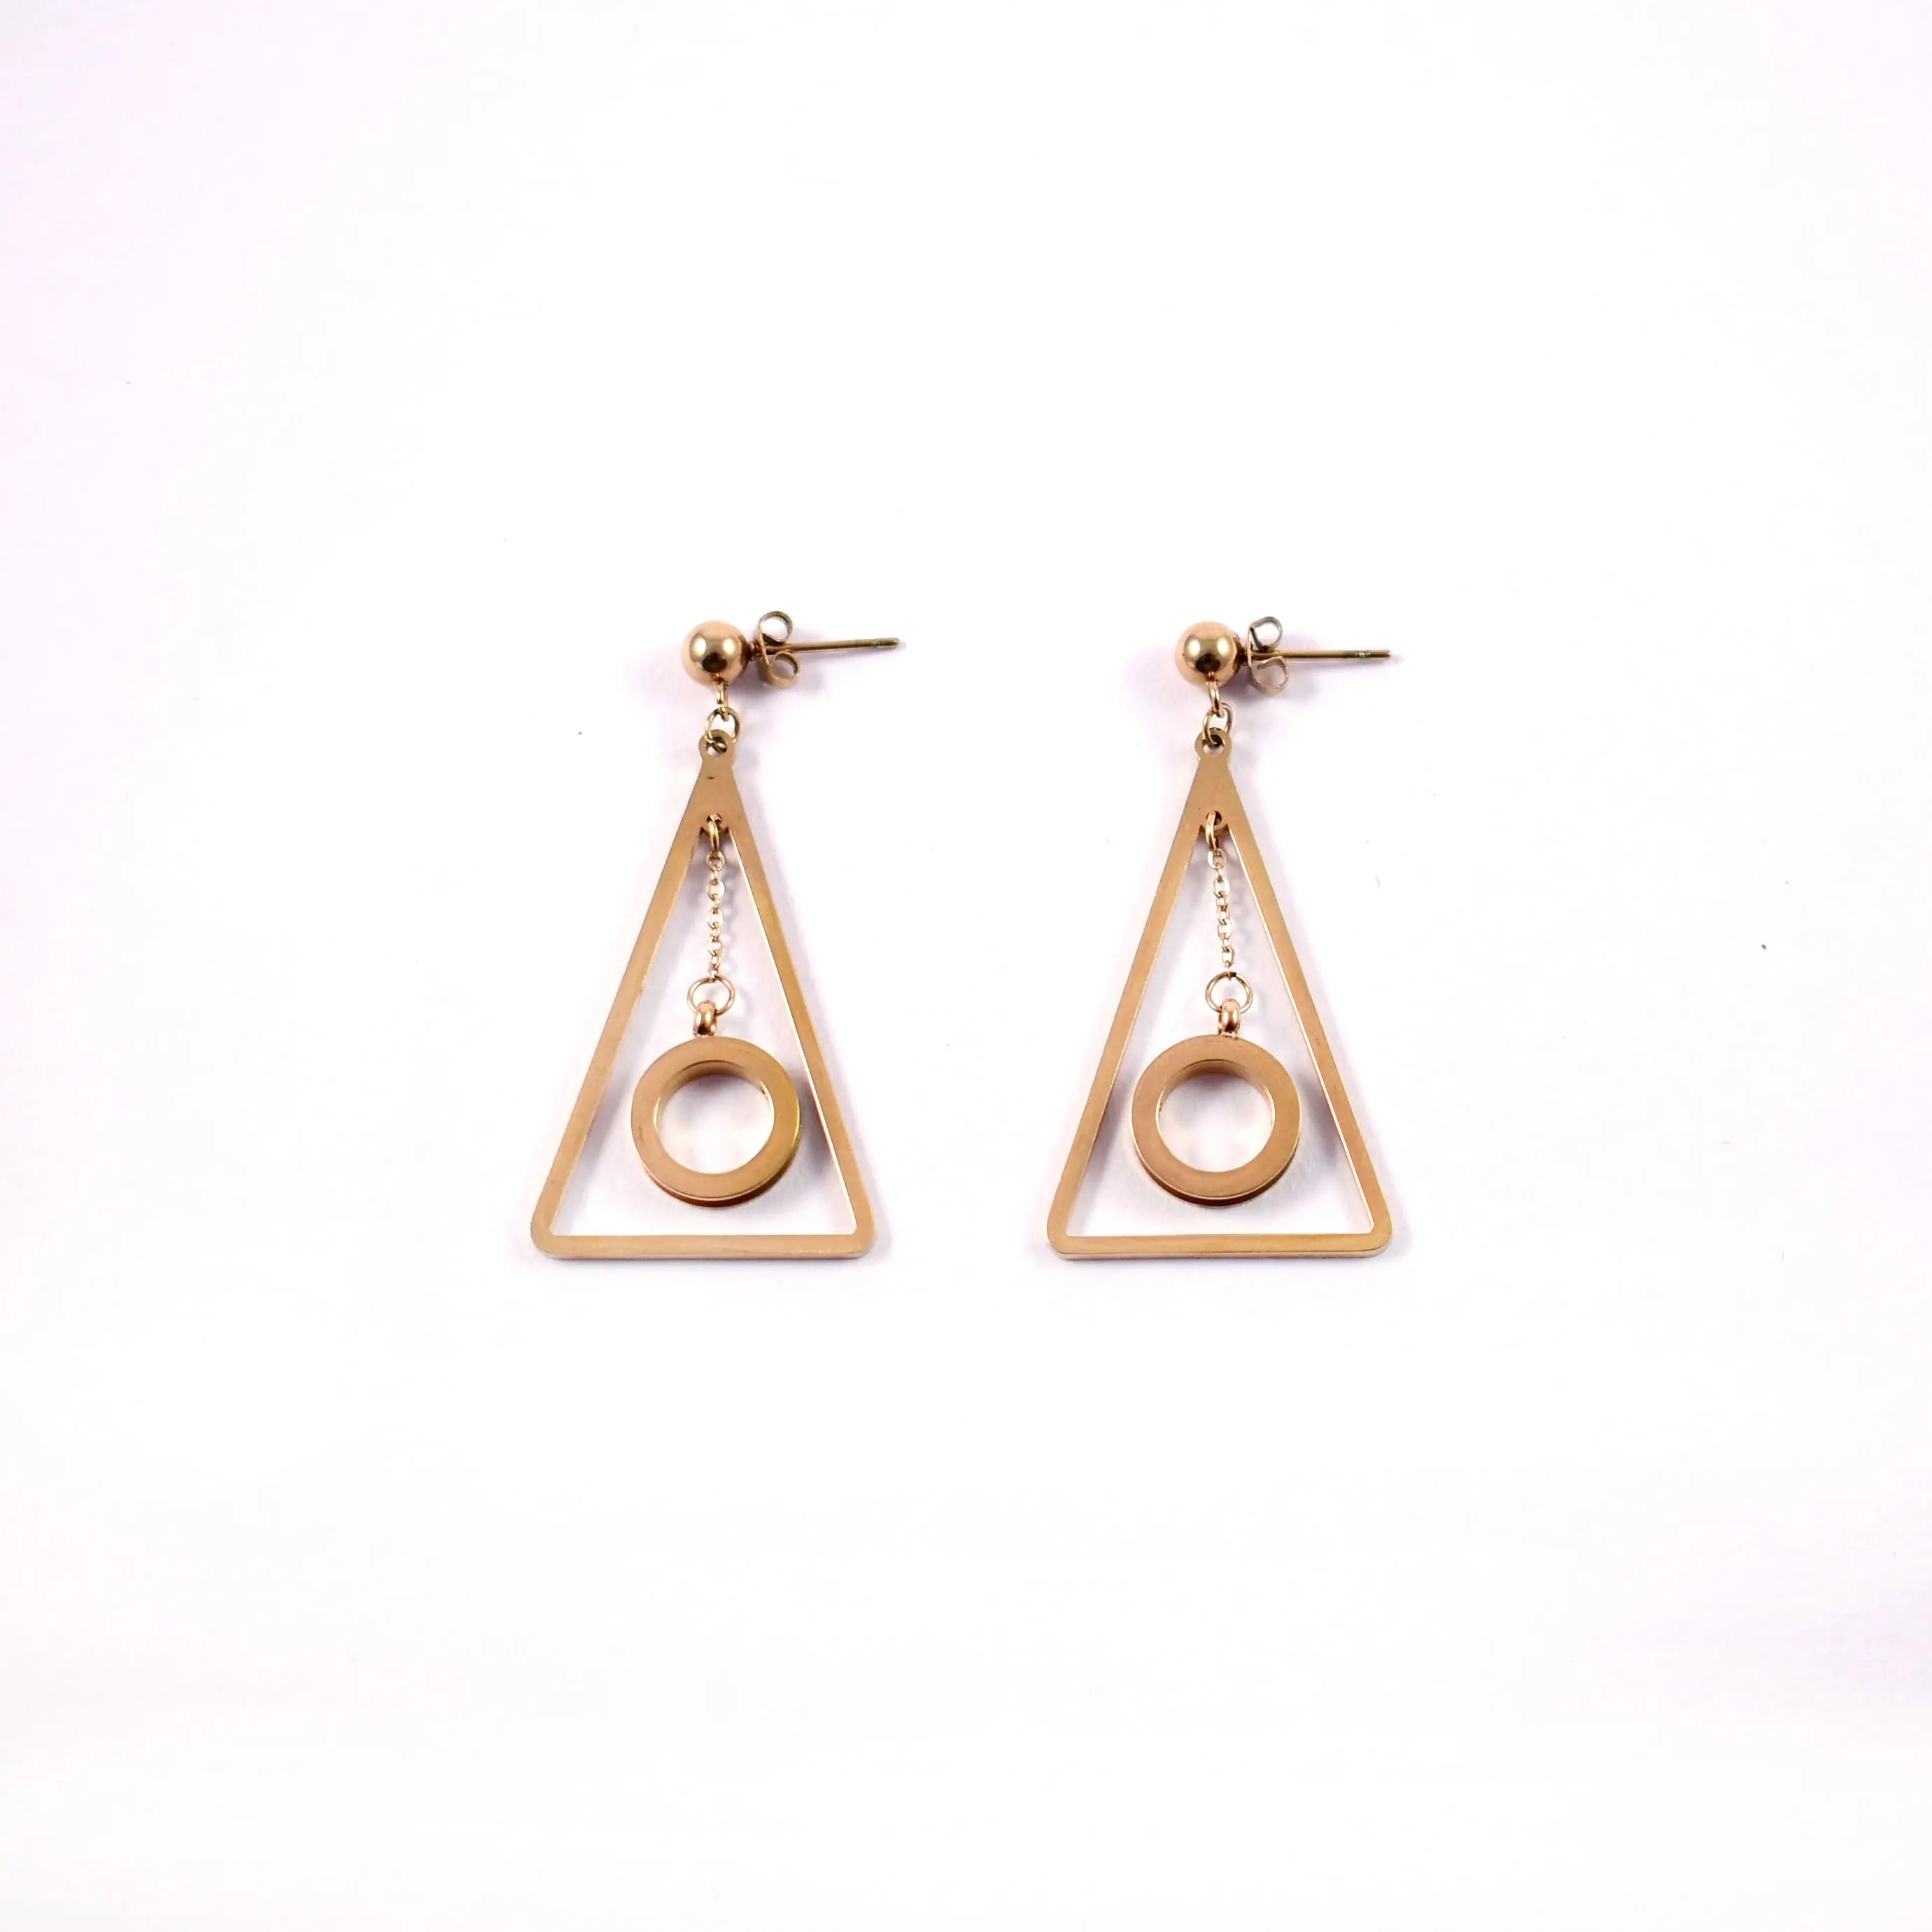 Golden Snitch Quidditch Earrings Gold/Silver Tone NEW Harry Potter Earrings  | eBay